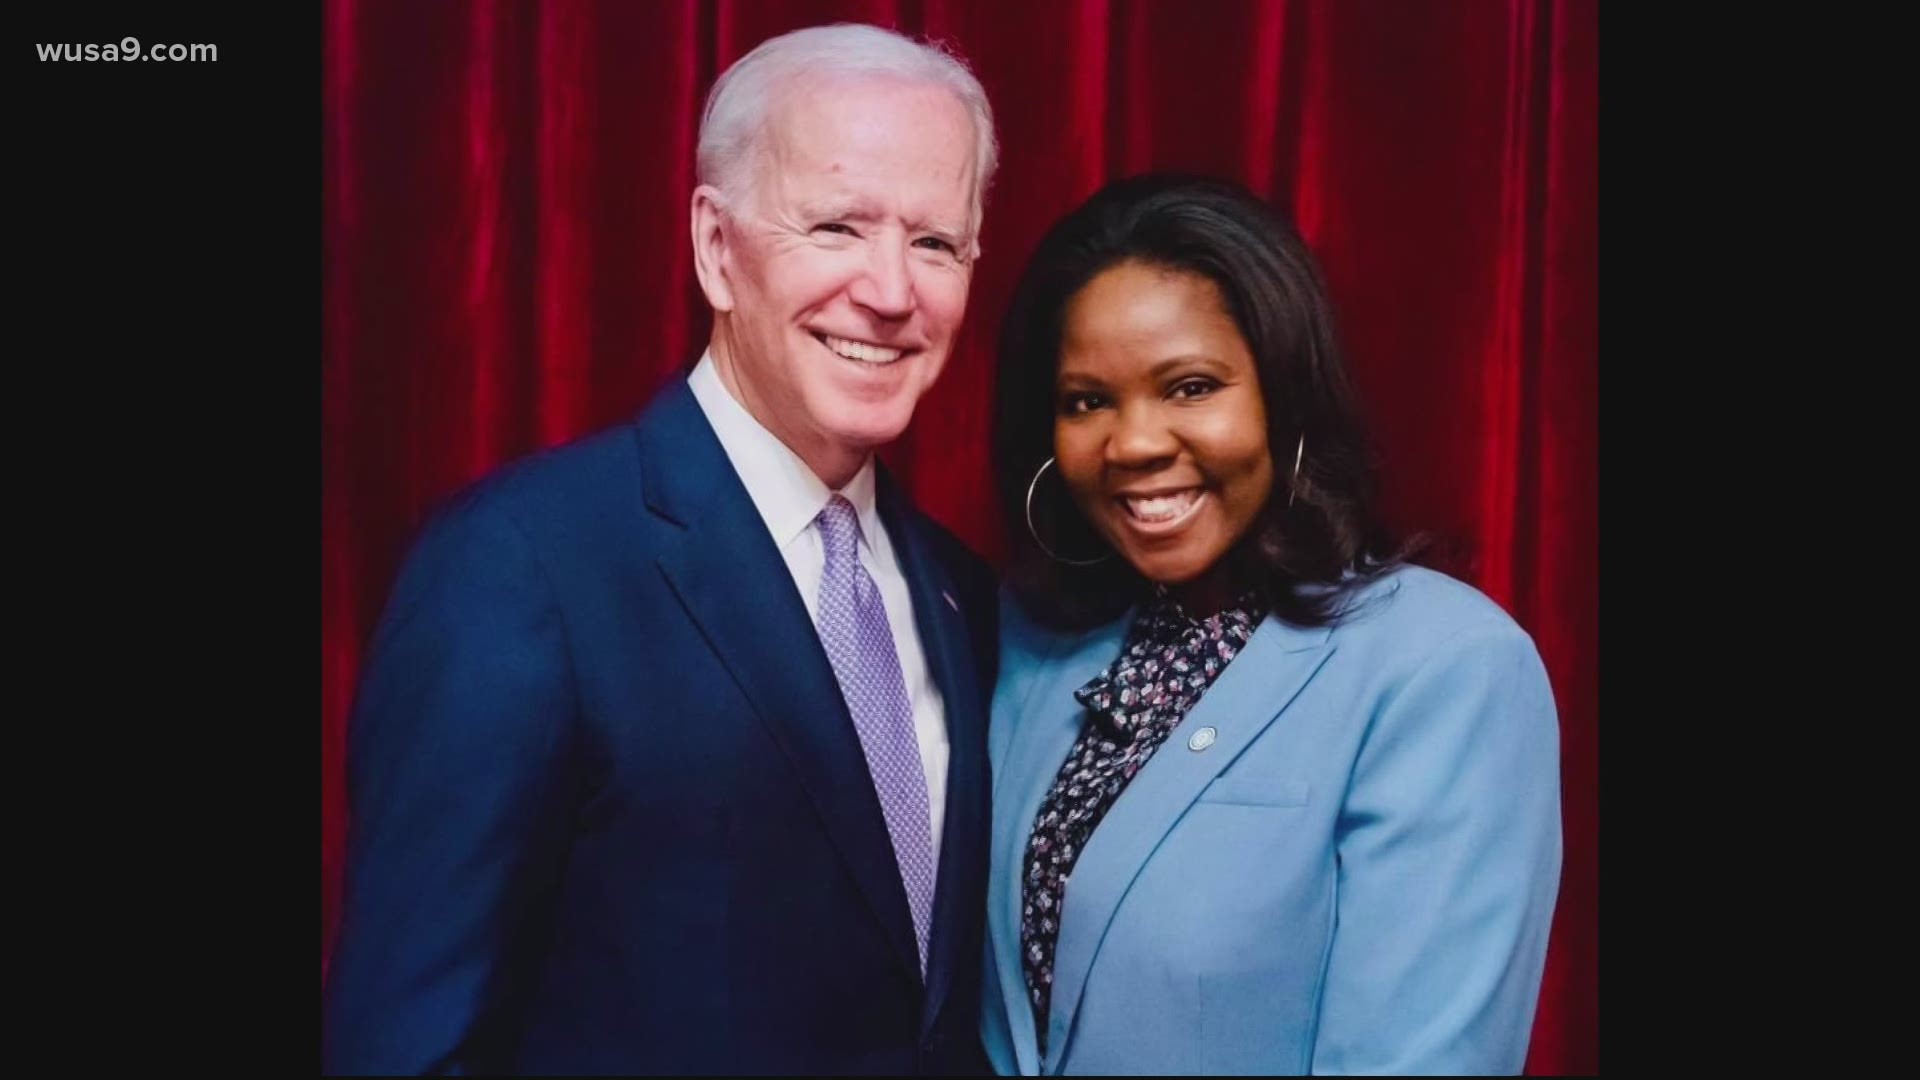 Biden/Harris campaign credit success on focusing on engaging Black voters.